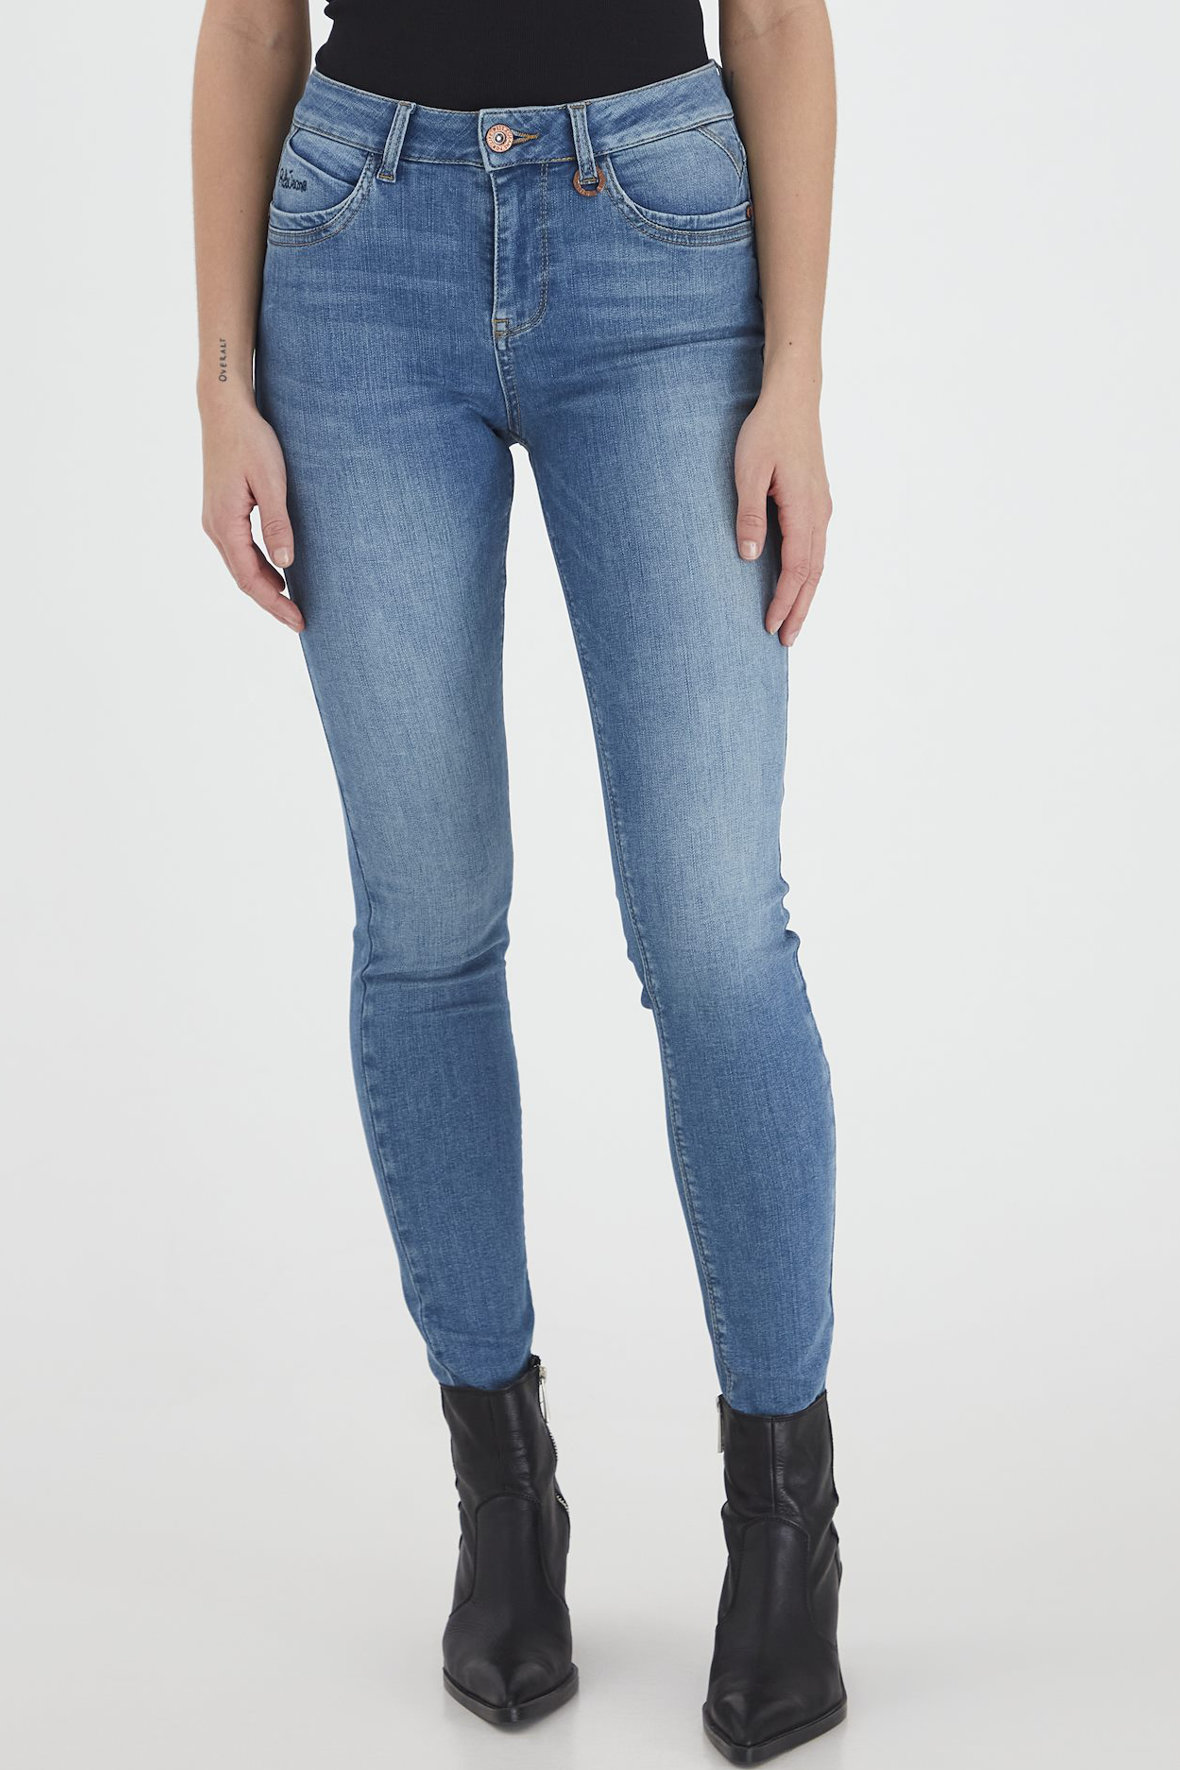 Pulz Emma jeans - high skinny fit straight leg -denim- dame Hos